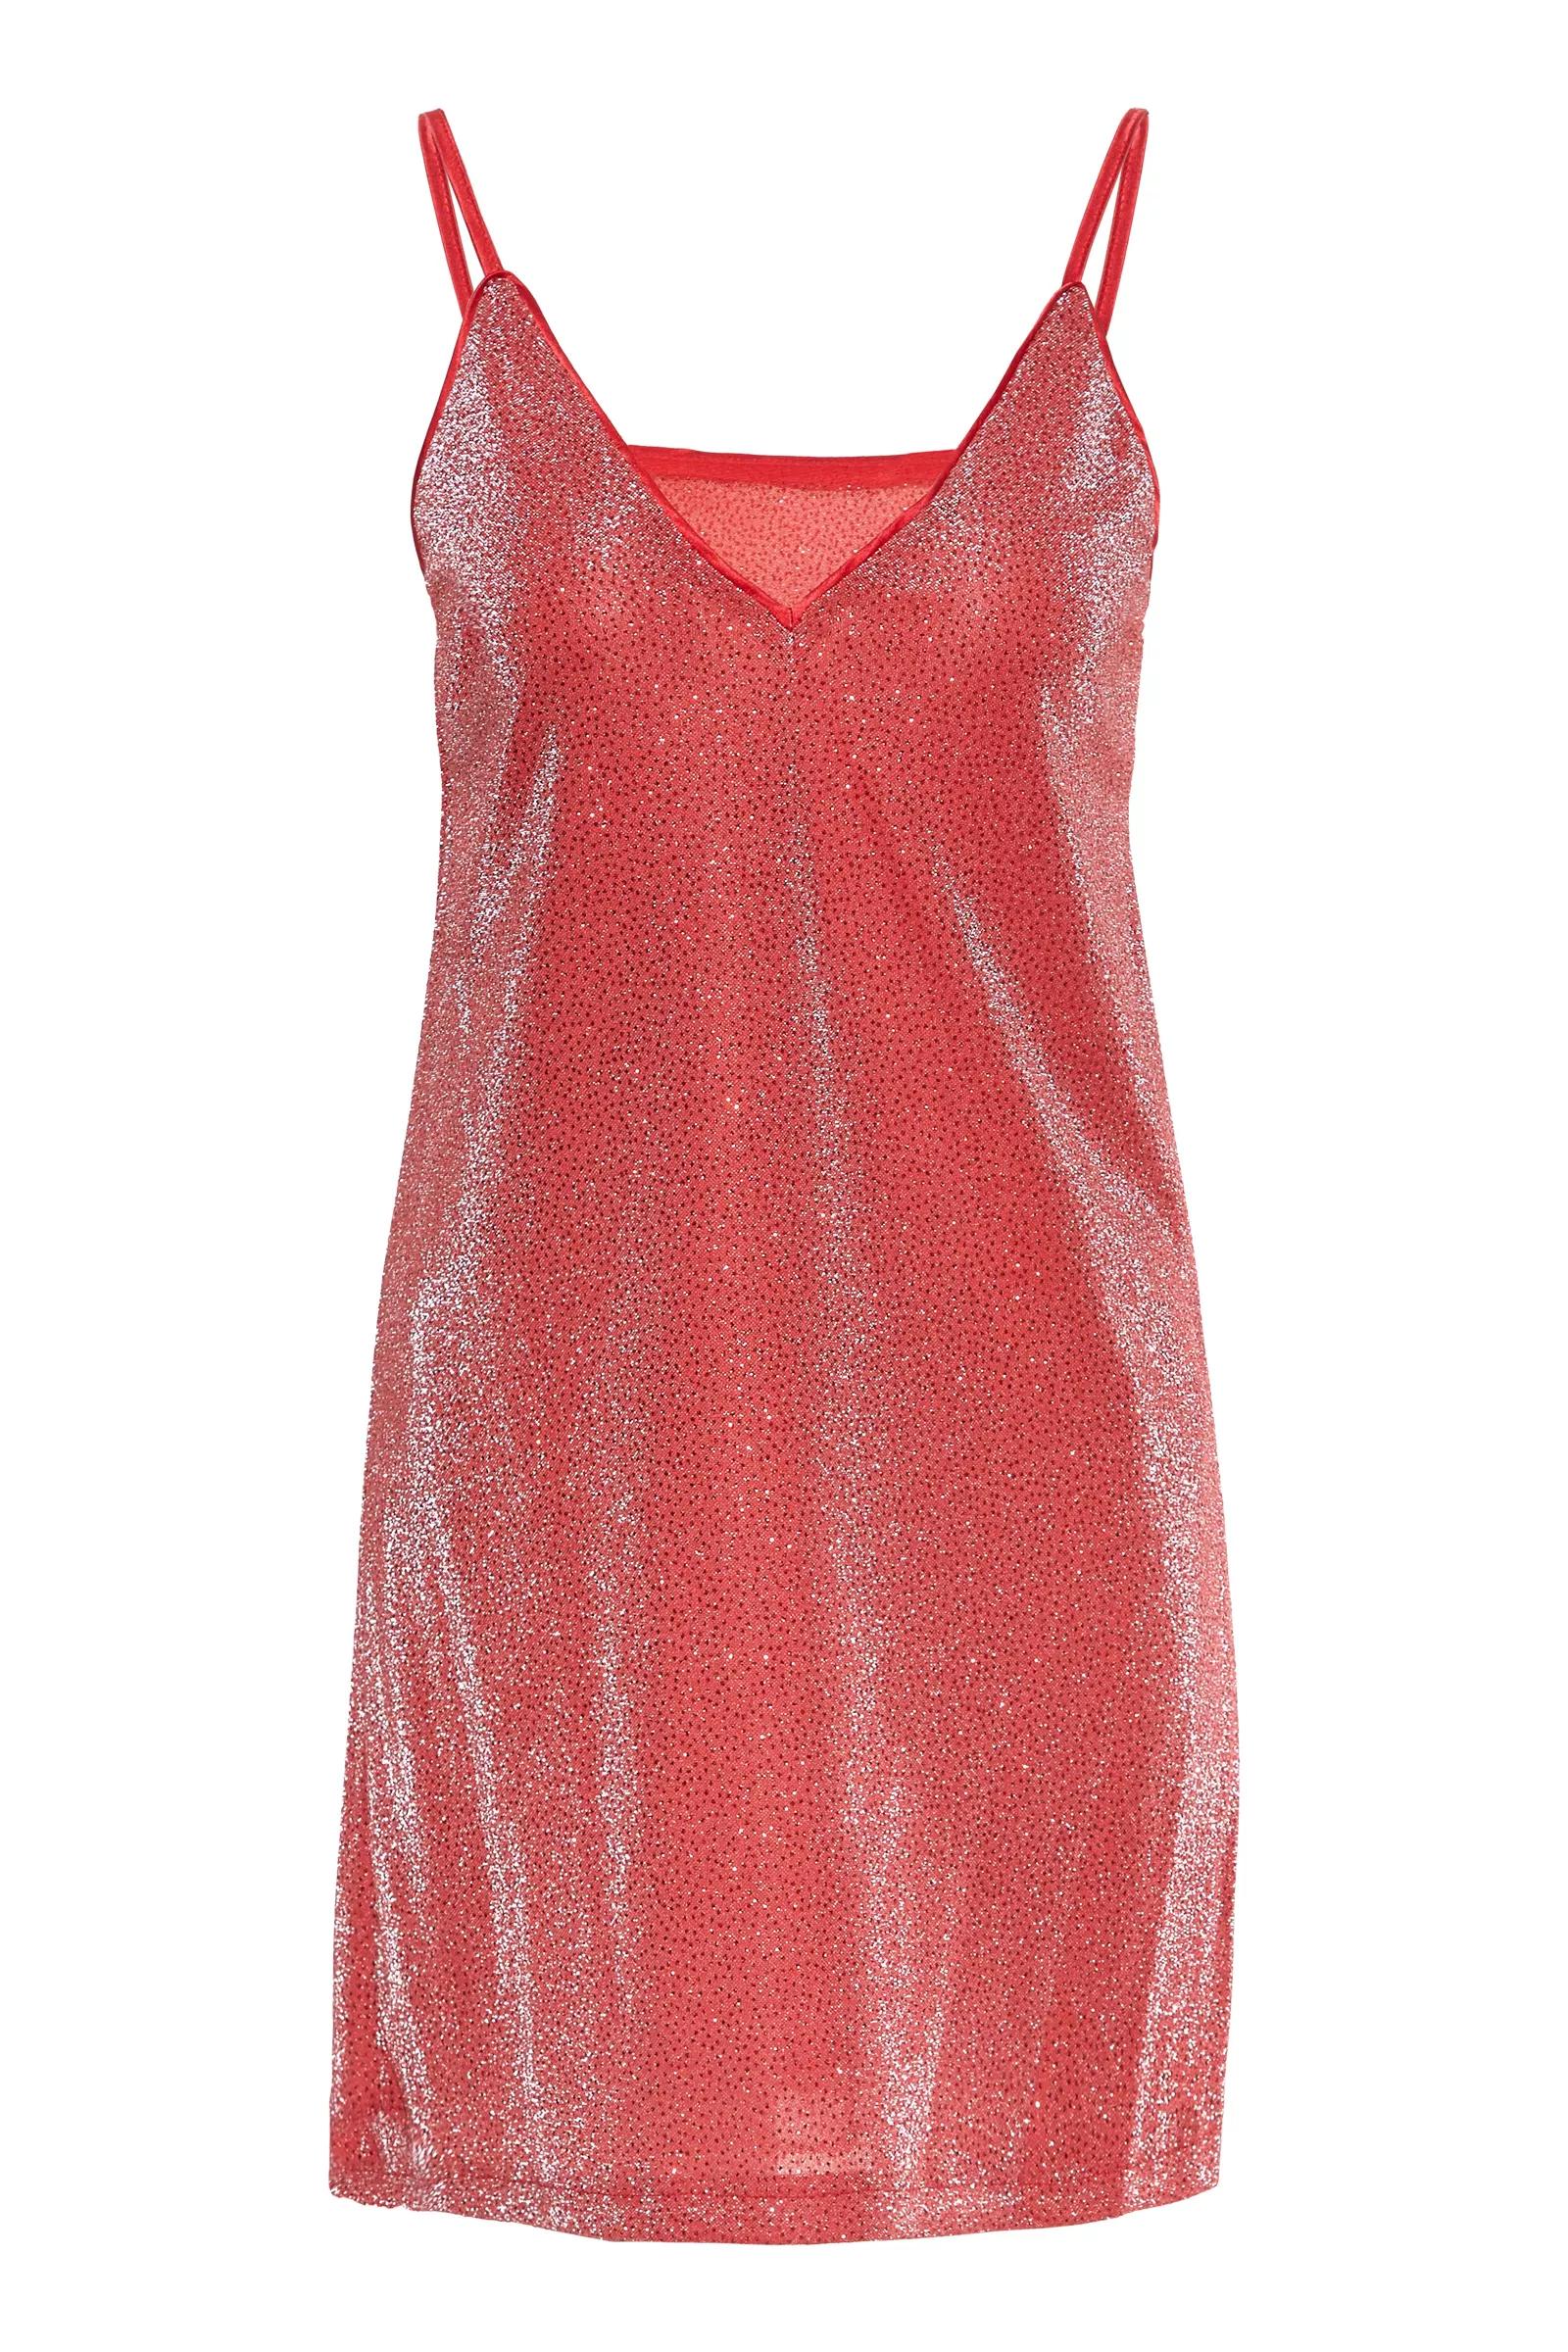 Red sequin sleeveless mini dress